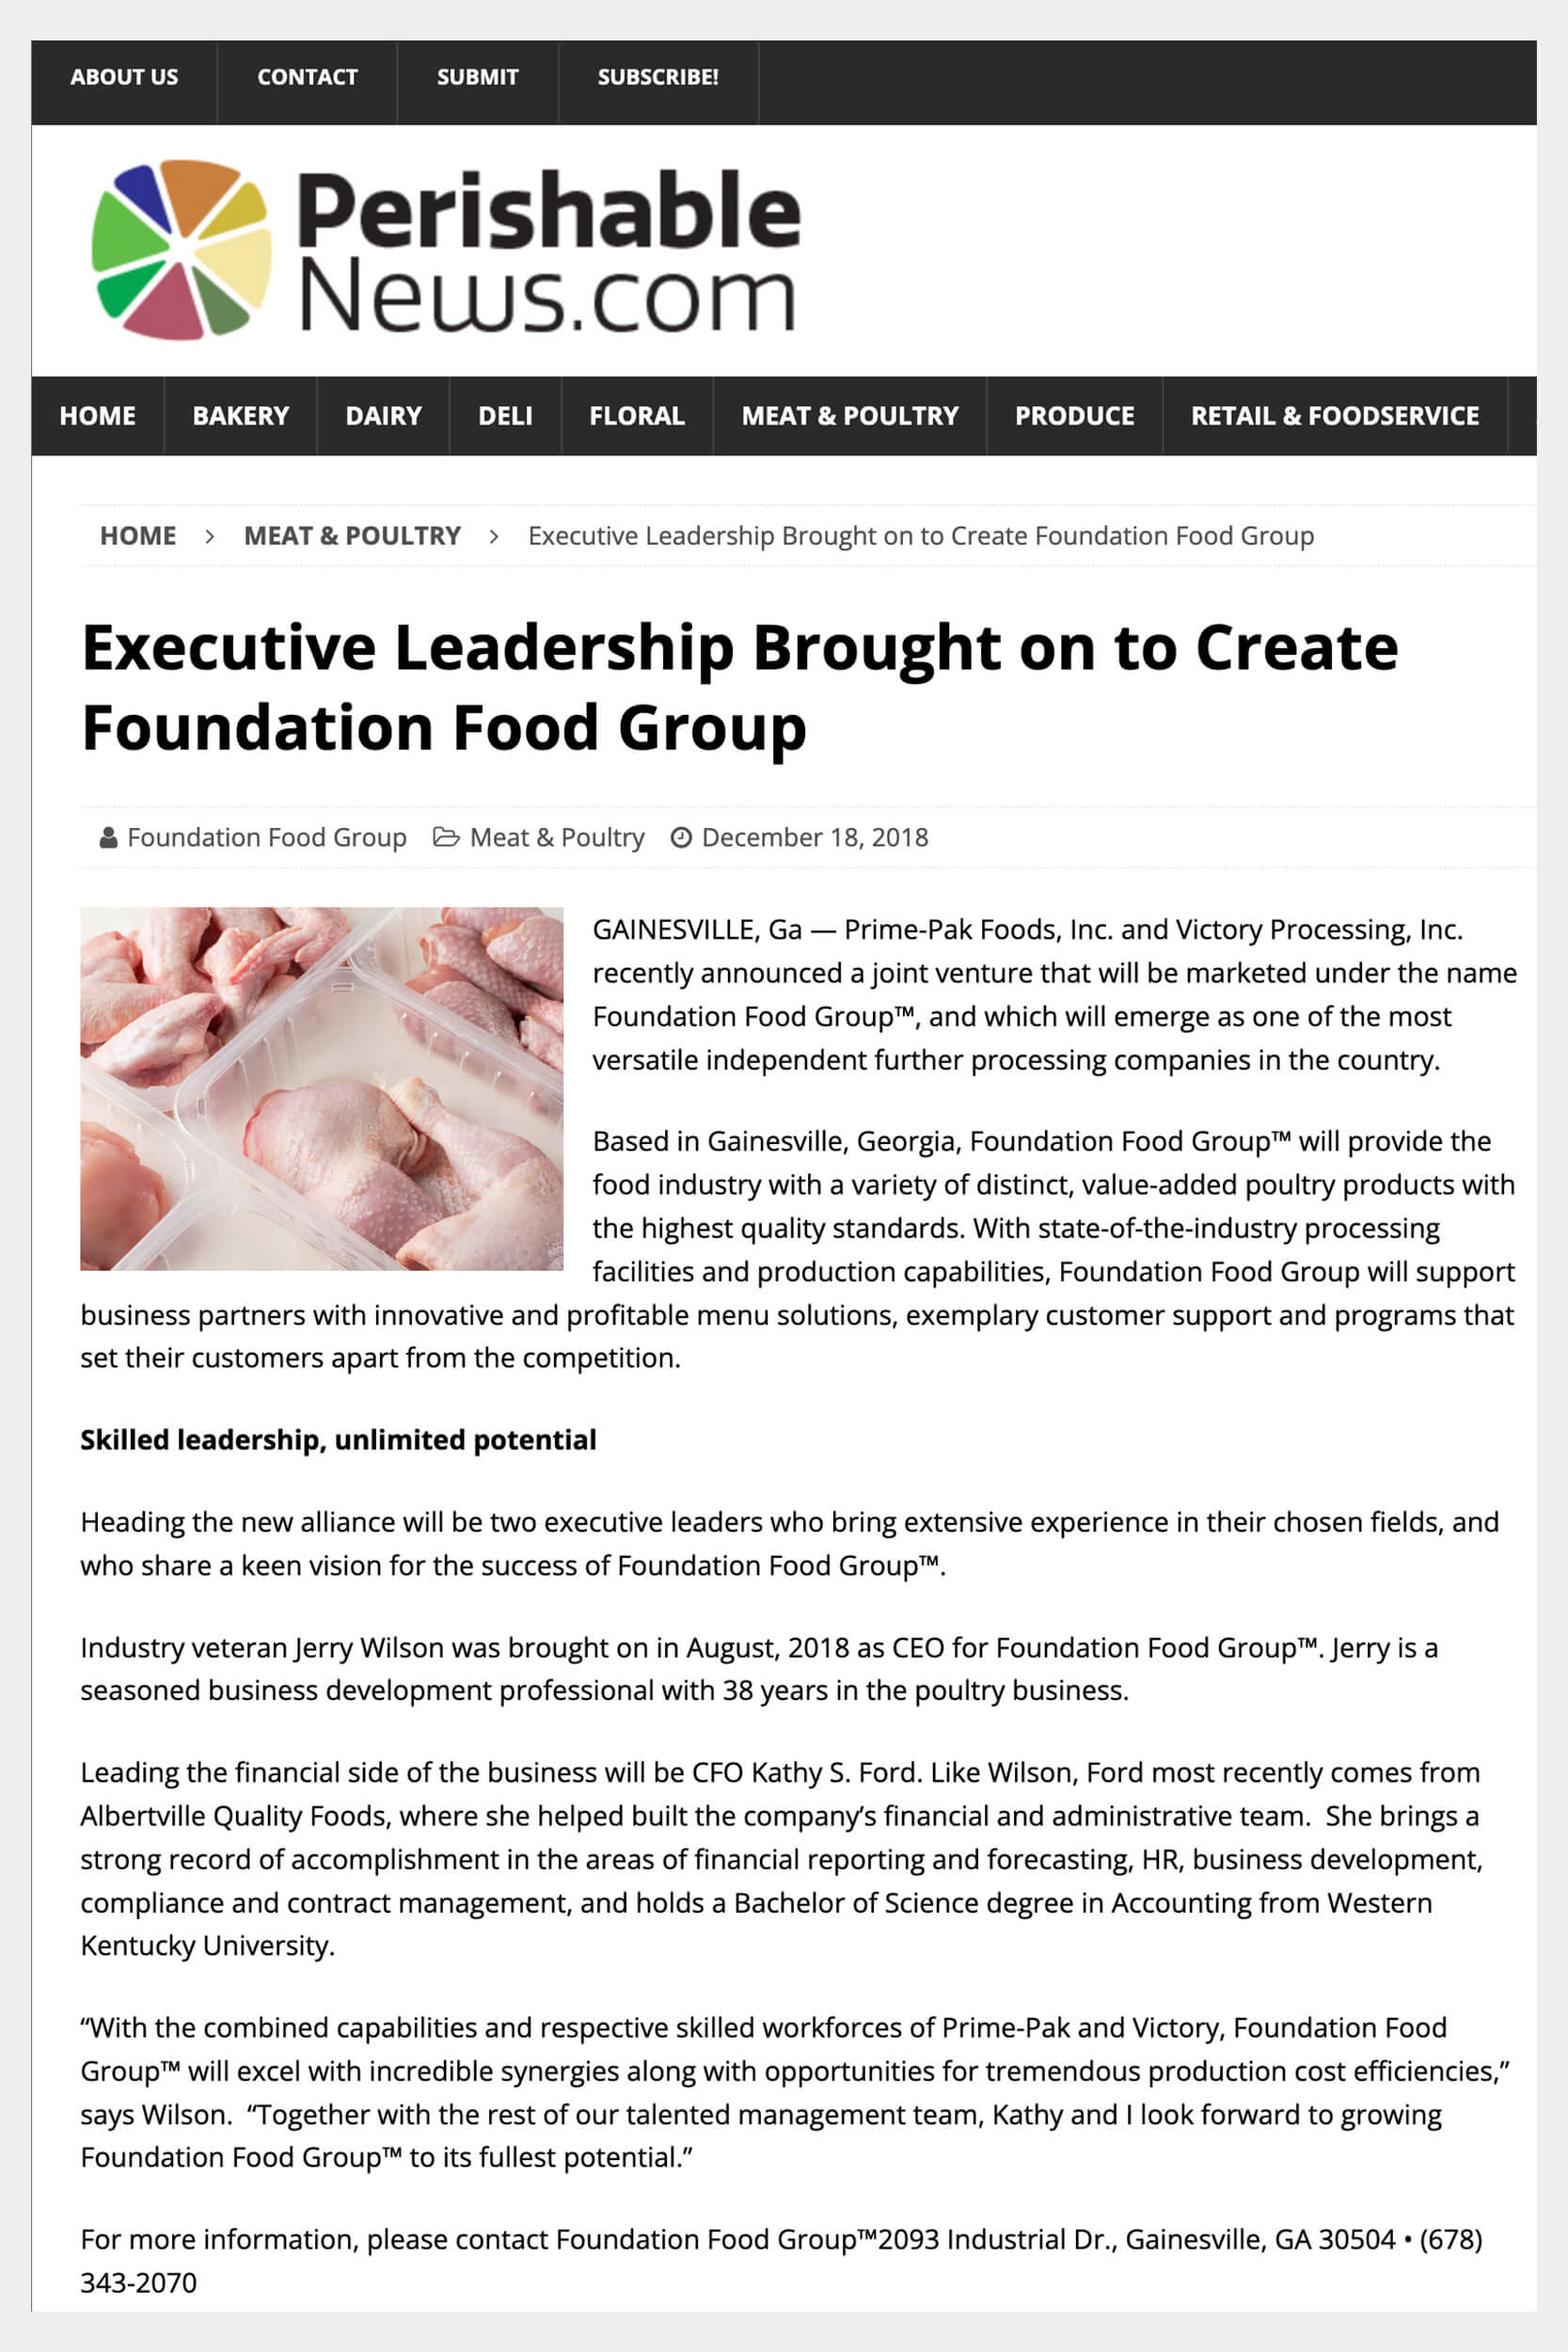 Fountation Food Group adds new leadership